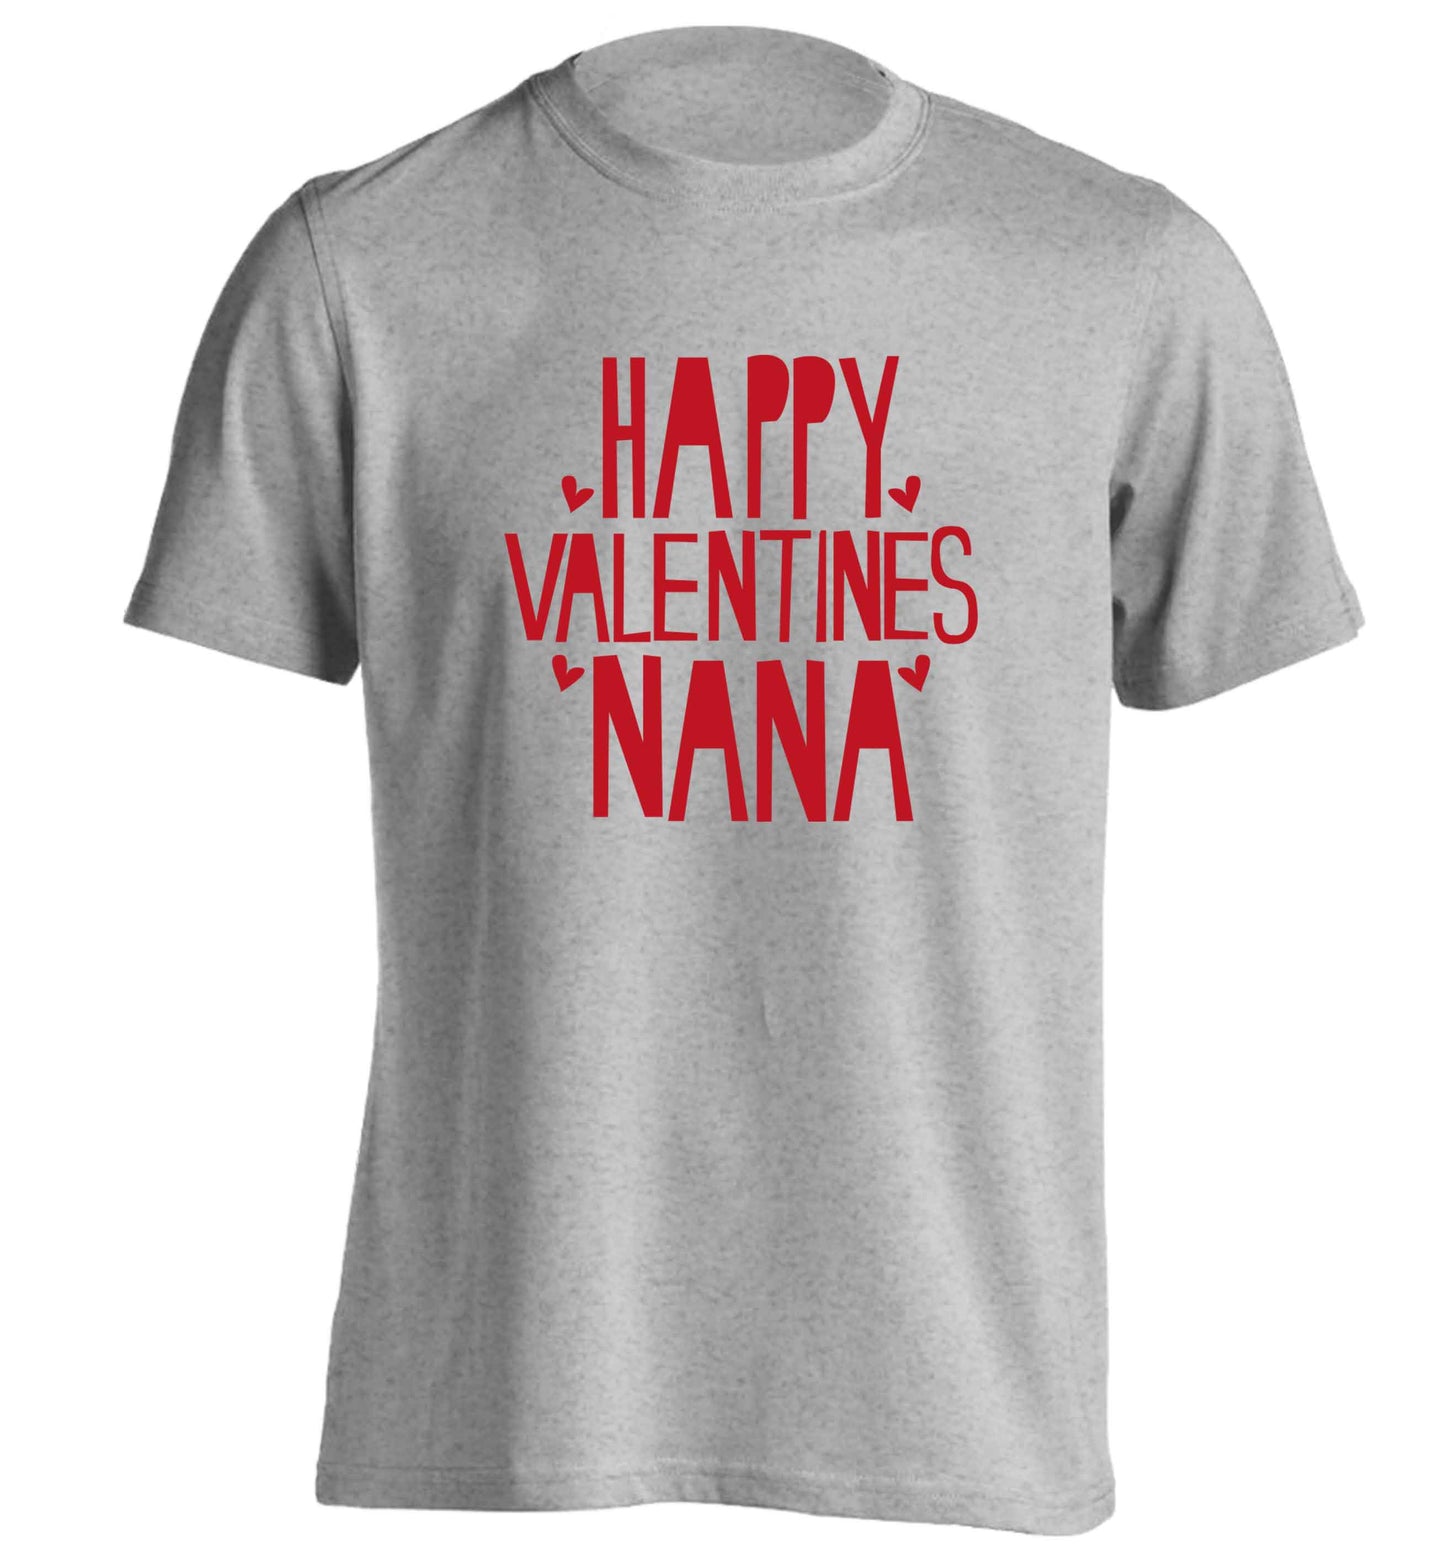 Happy valentines nana adults unisex grey Tshirt 2XL